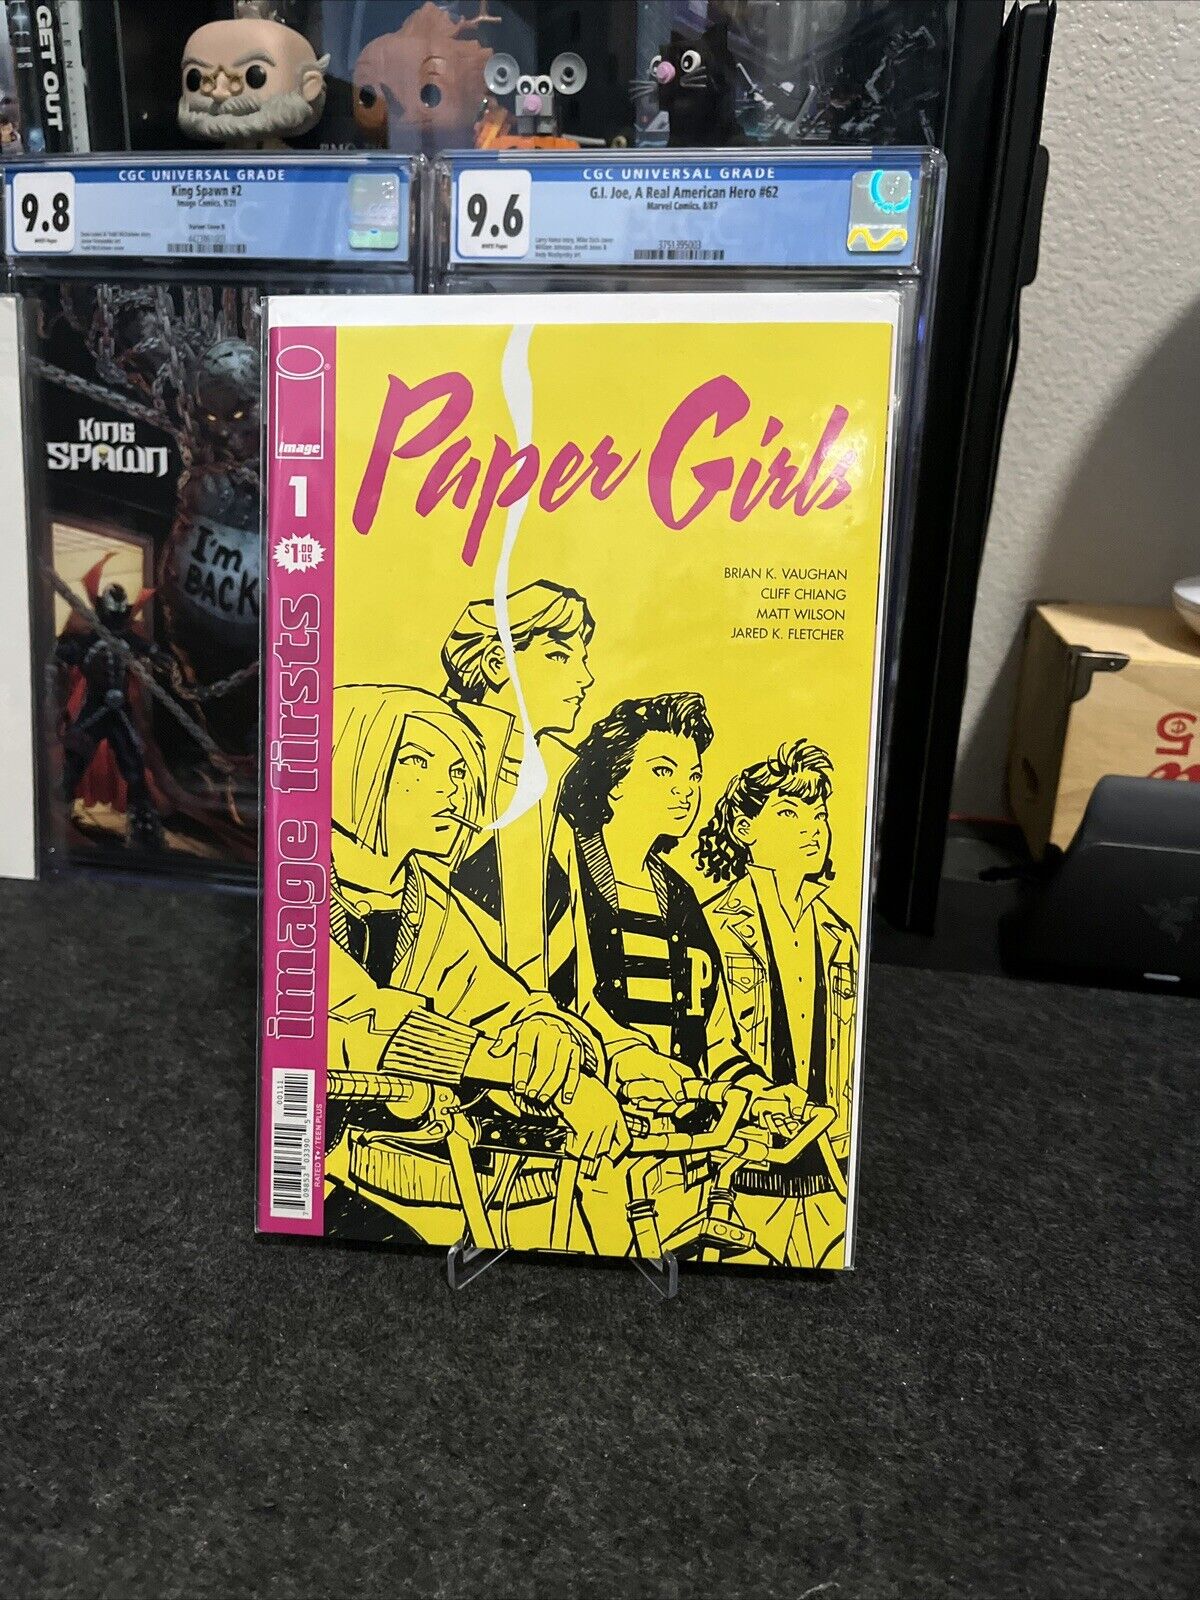 Paper Girls #1 Image Comics